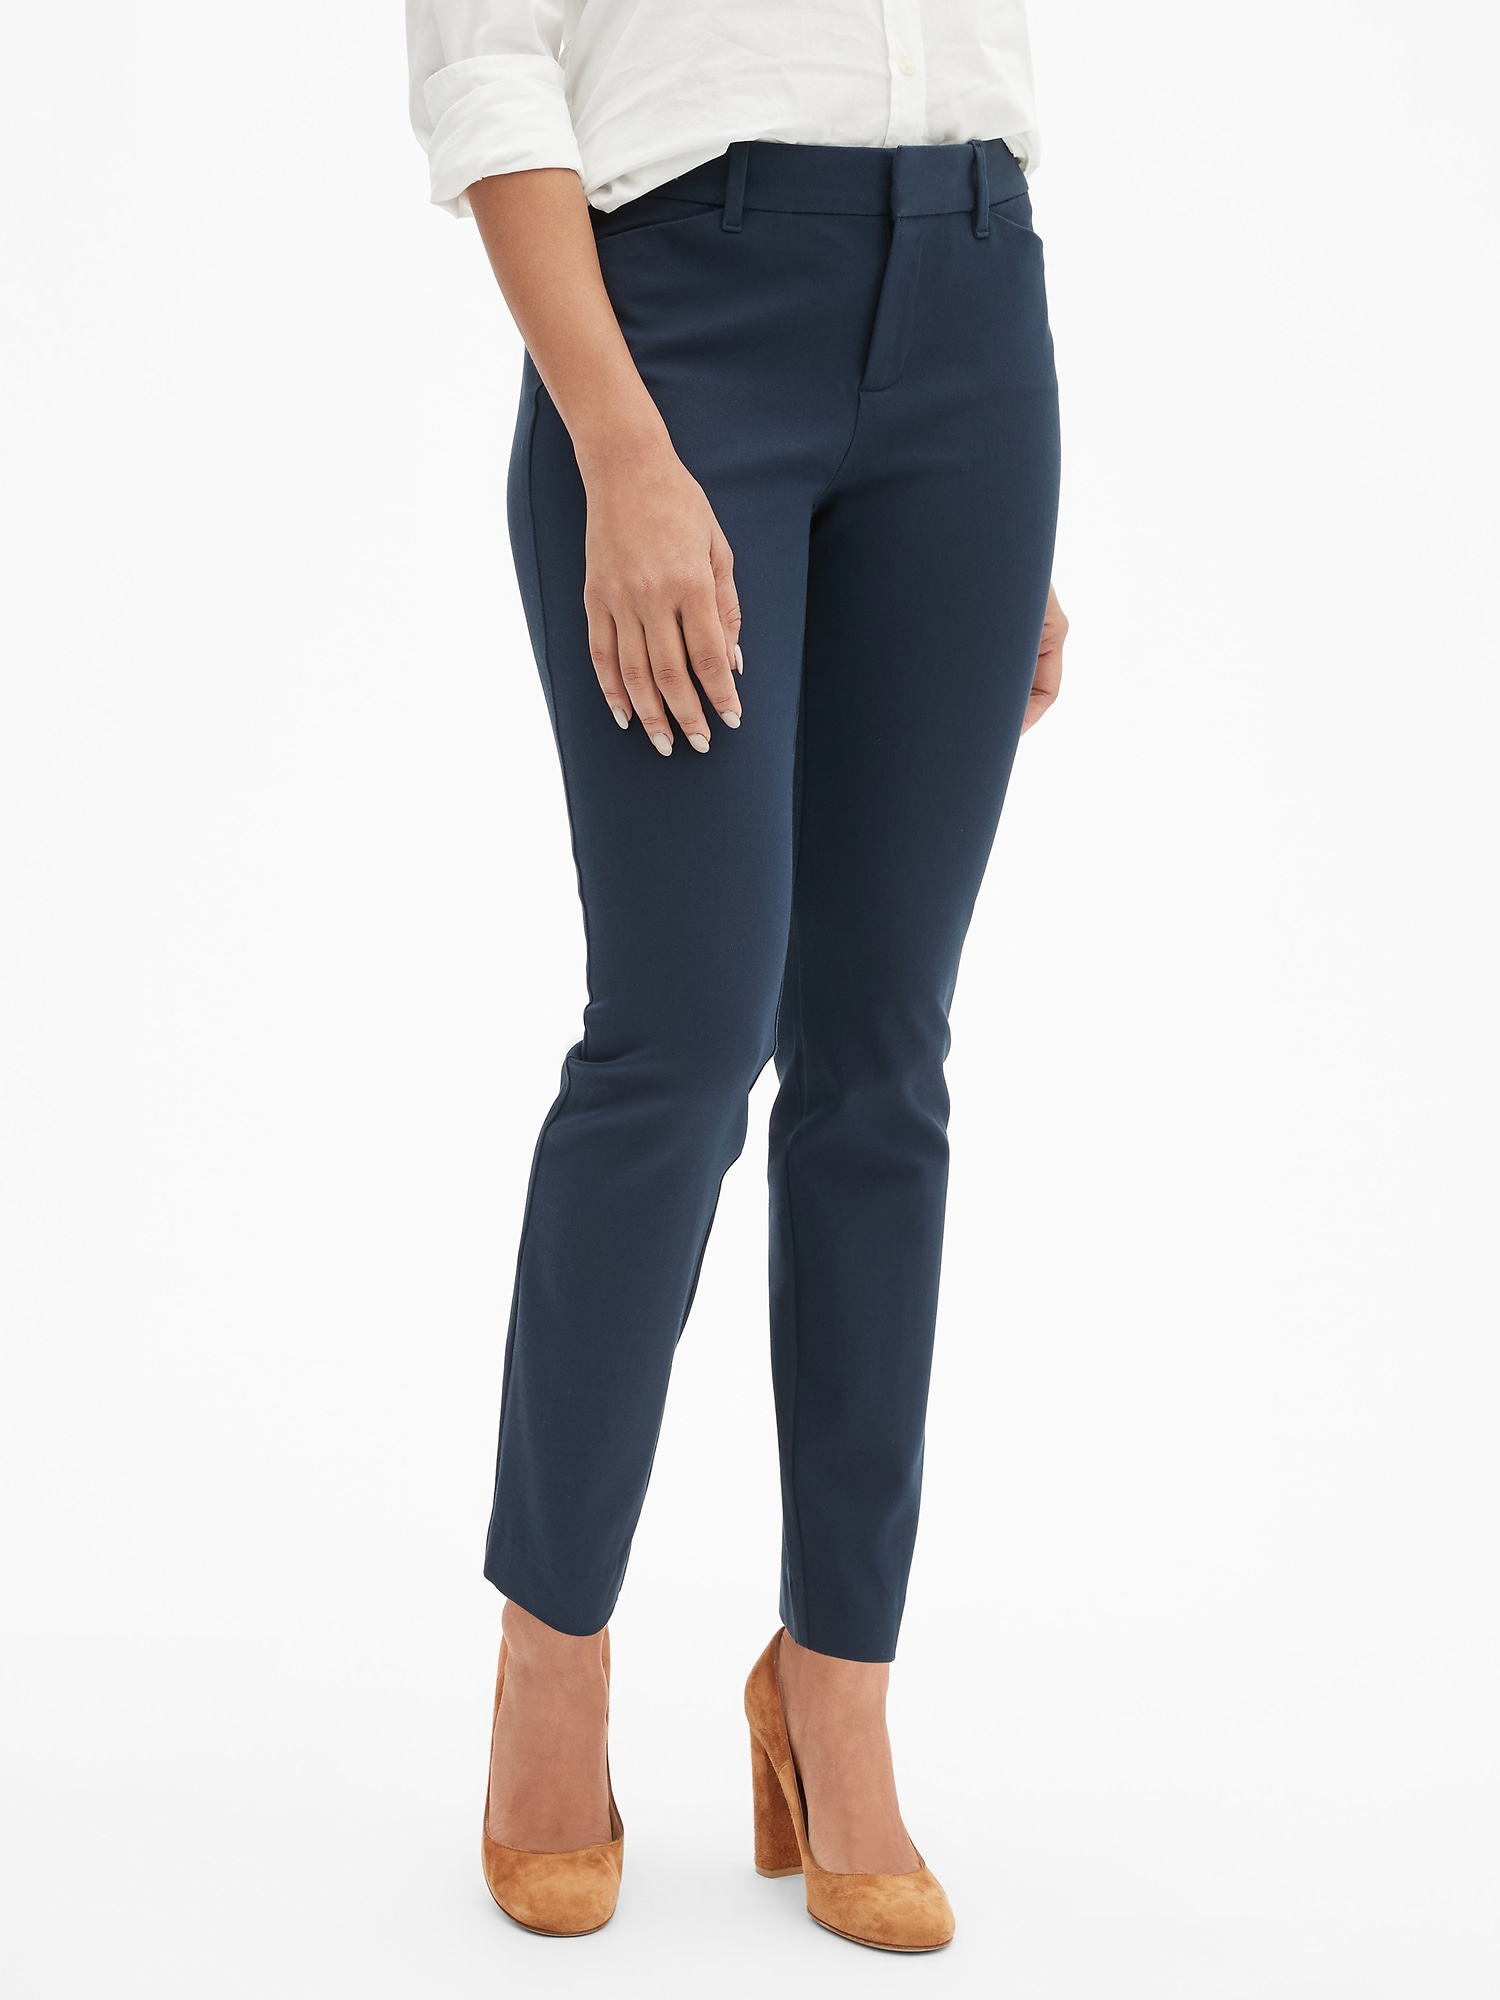 gap curvy skinny jeans review